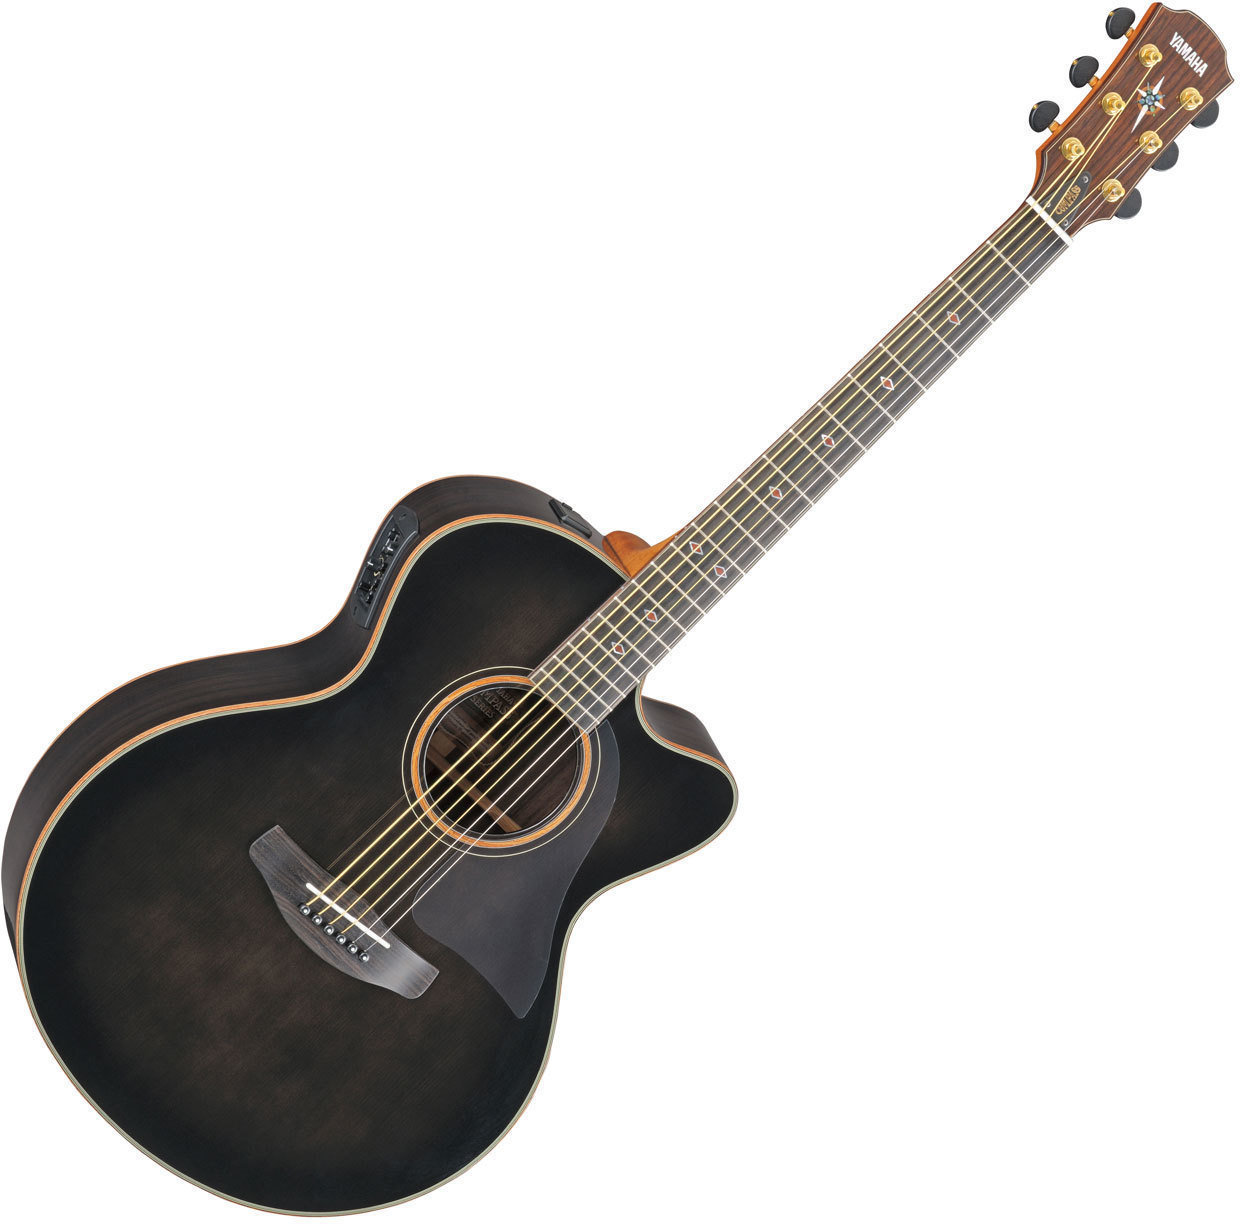 Elektroakustinen kitara Yamaha CPX1200II TBL Translucent Black